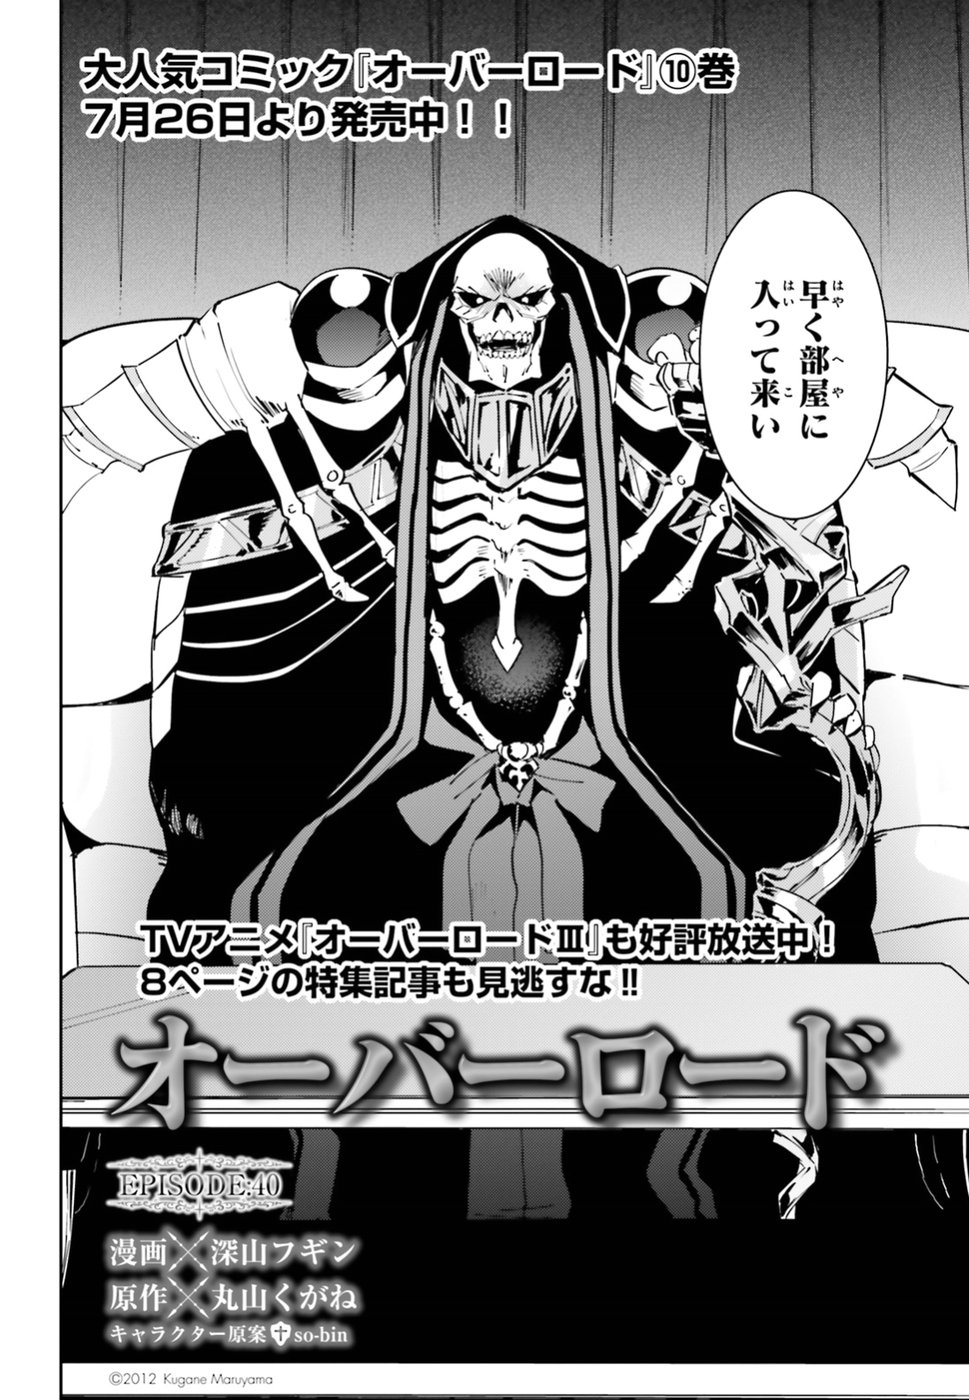 overlord manga chapter 7